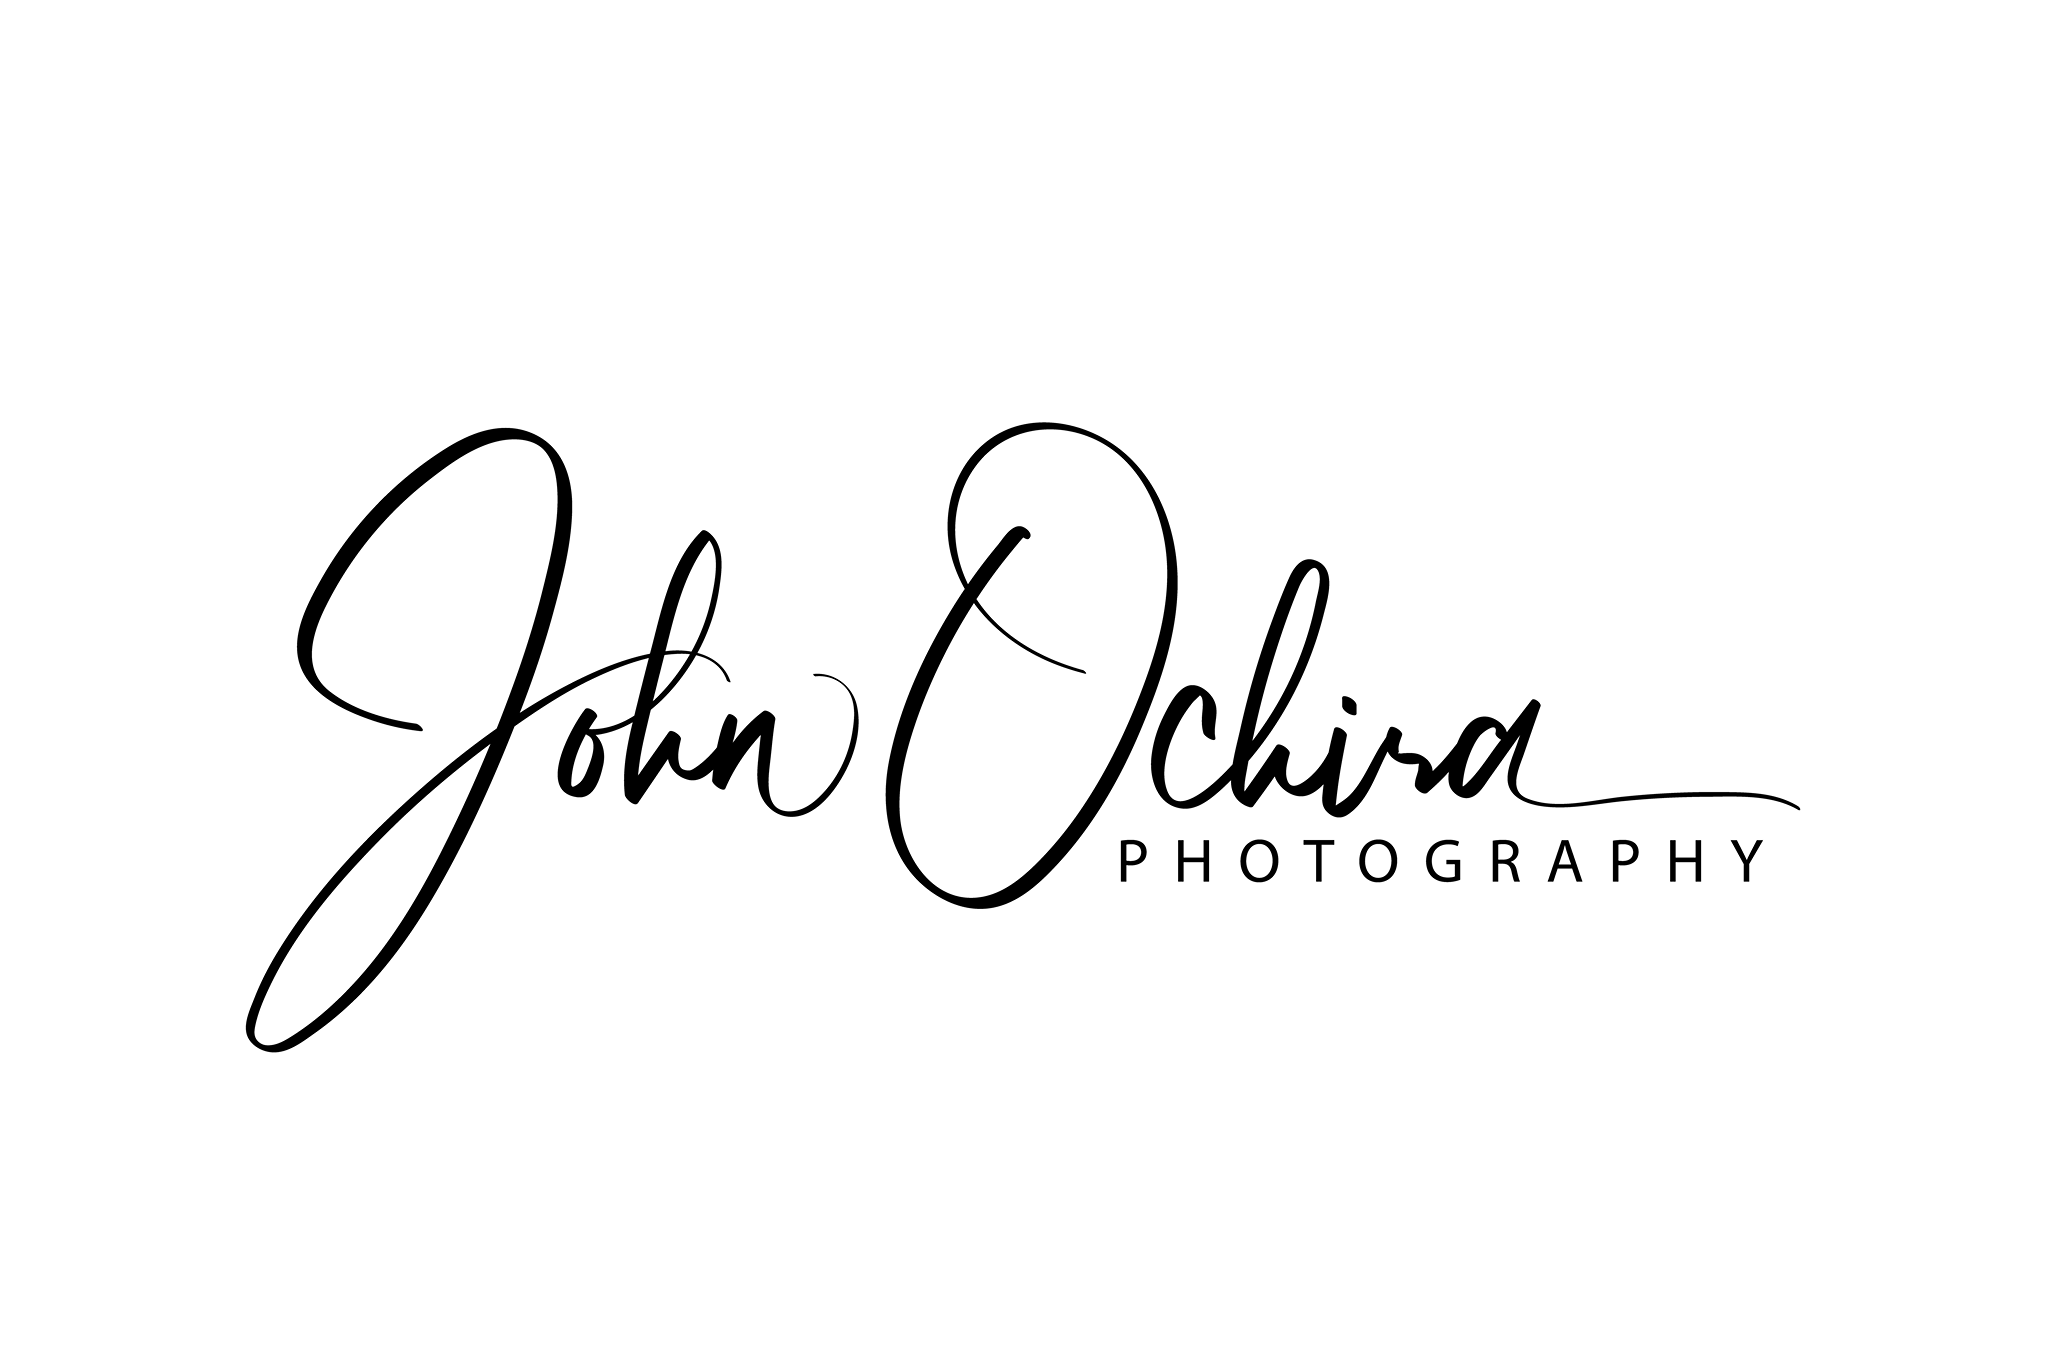 John ochira photography business Logo